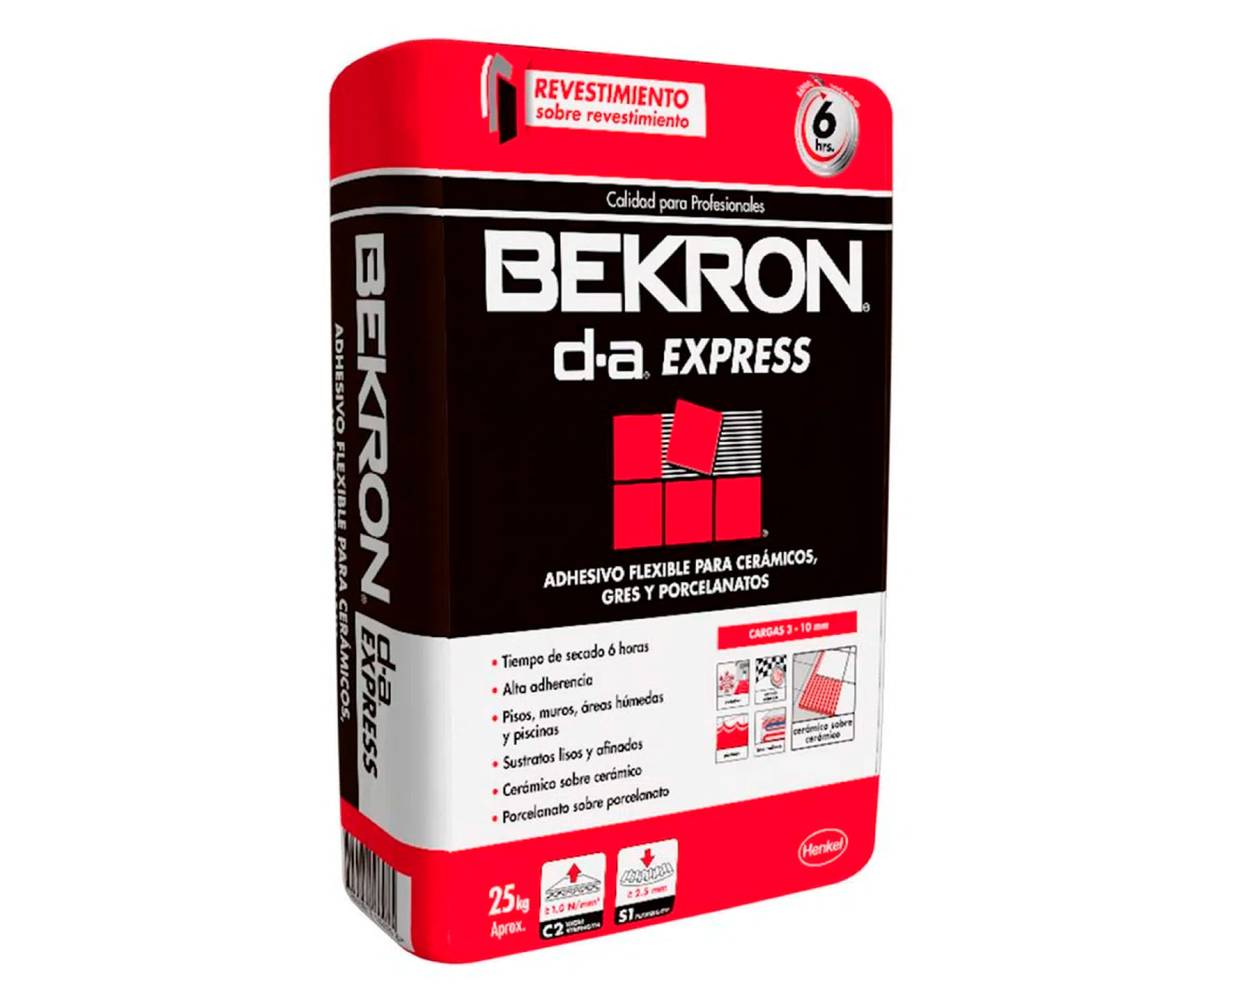 Bekron adhesivo flexible cerámica d-a express (saco 25 kg)